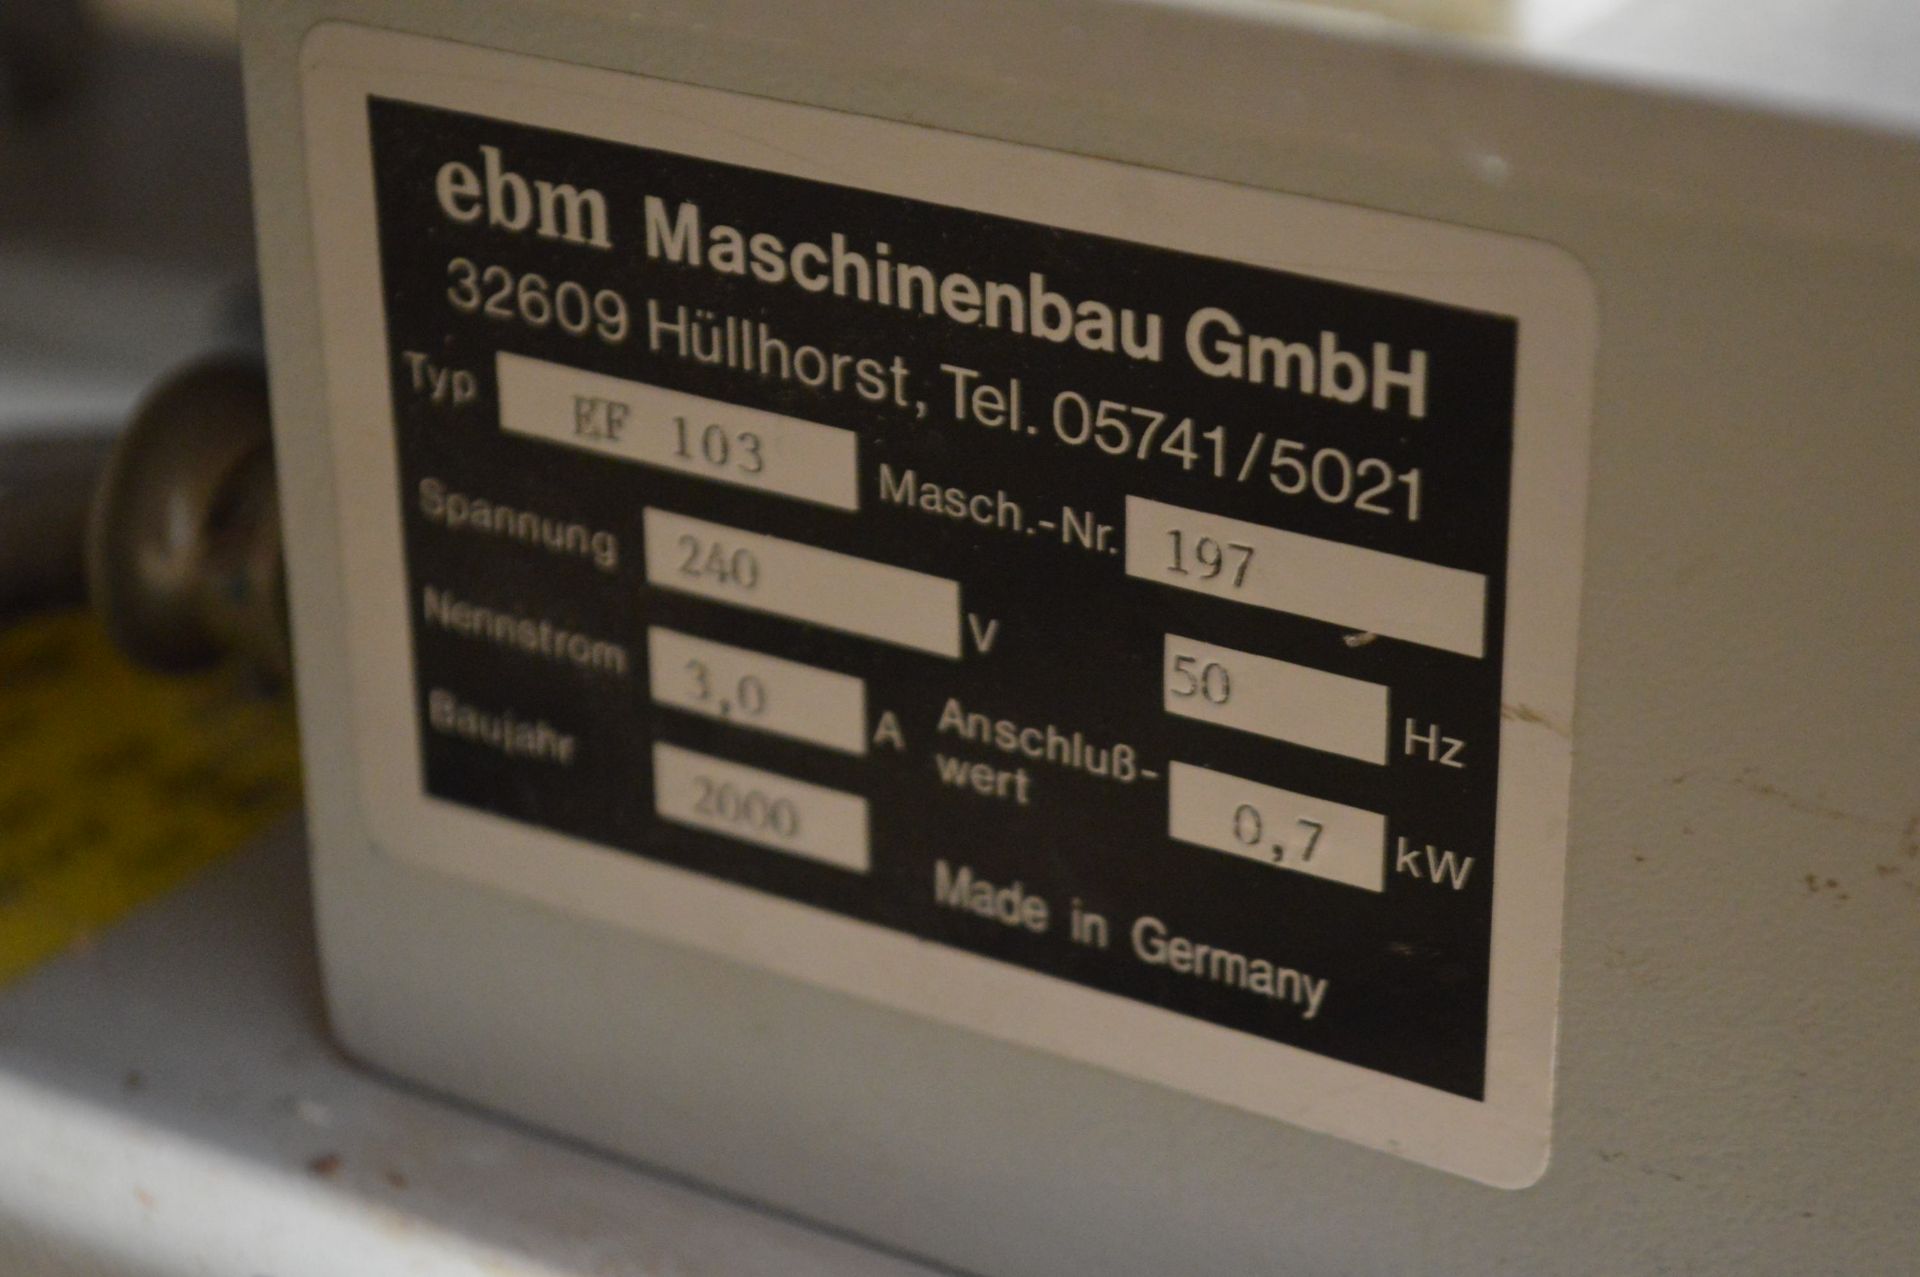 EBM Type EF103 Bench Top Corner Edge Cleaner, mach - Image 3 of 3